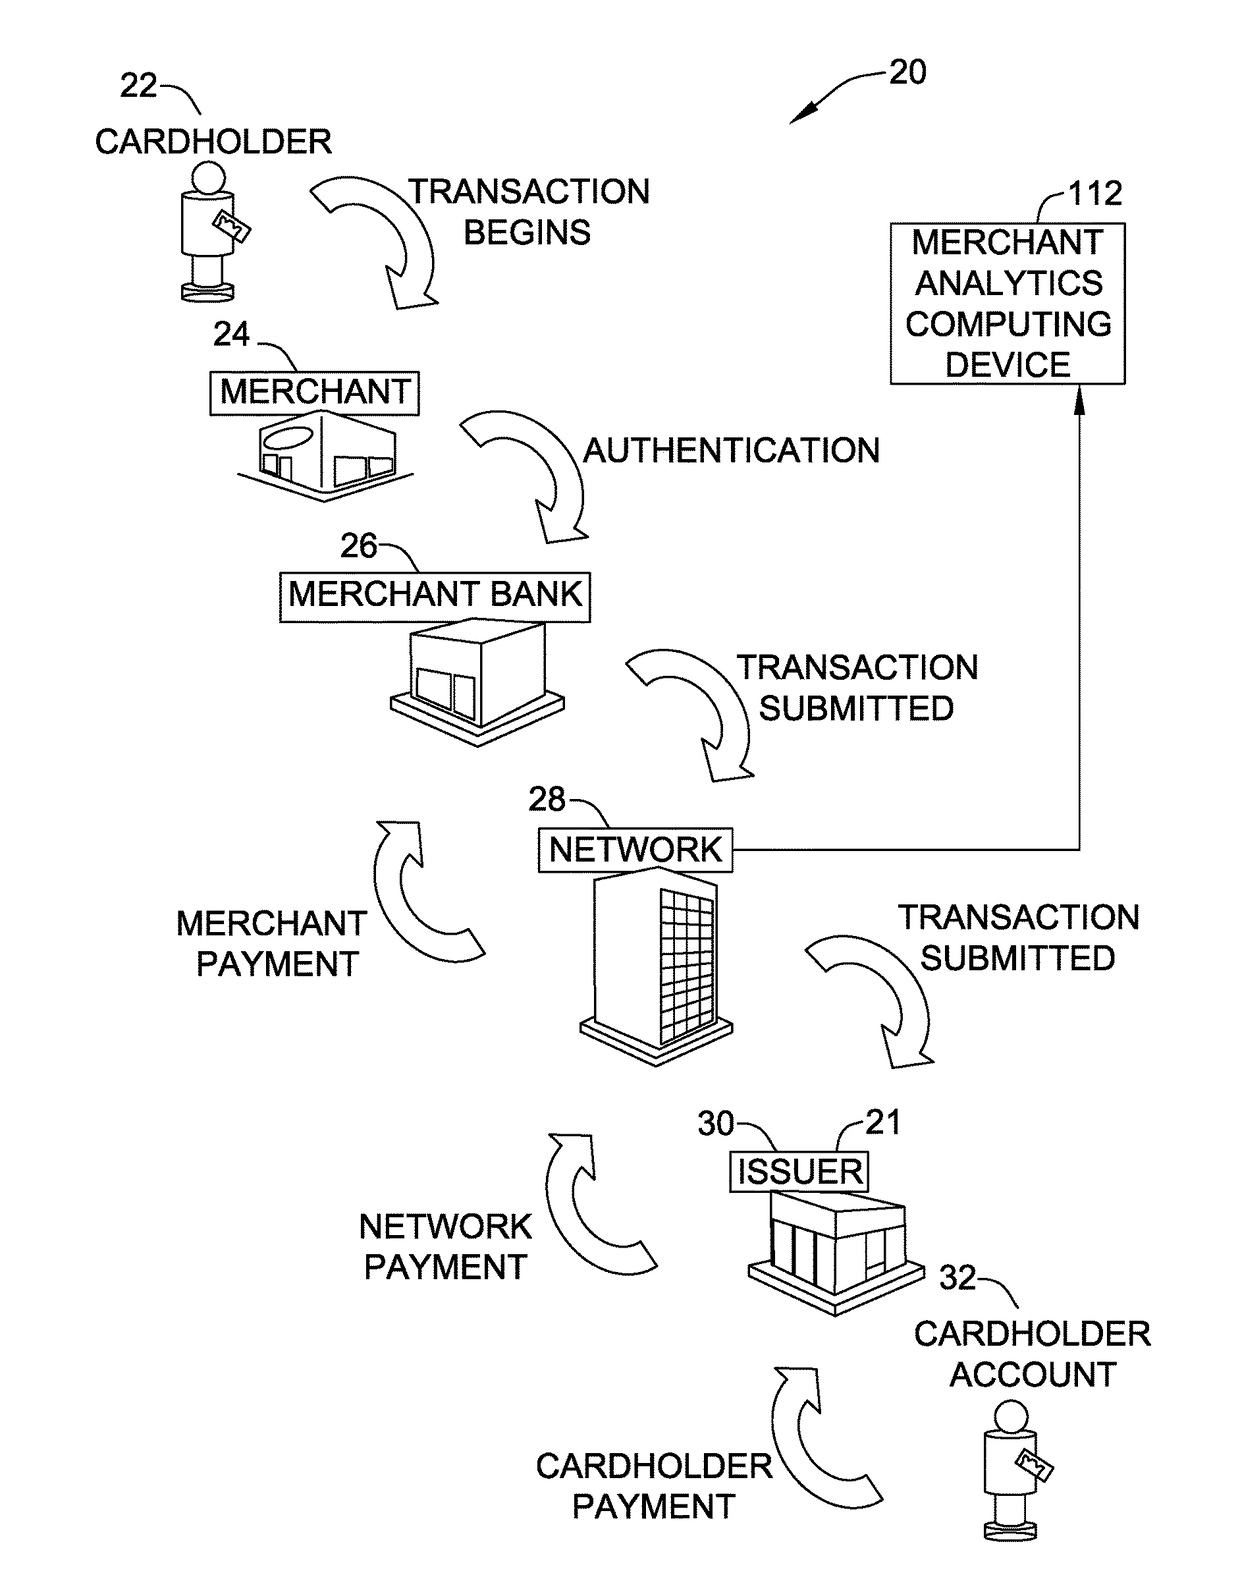 Generating aggregated merchant analytics using origination location of online transactions